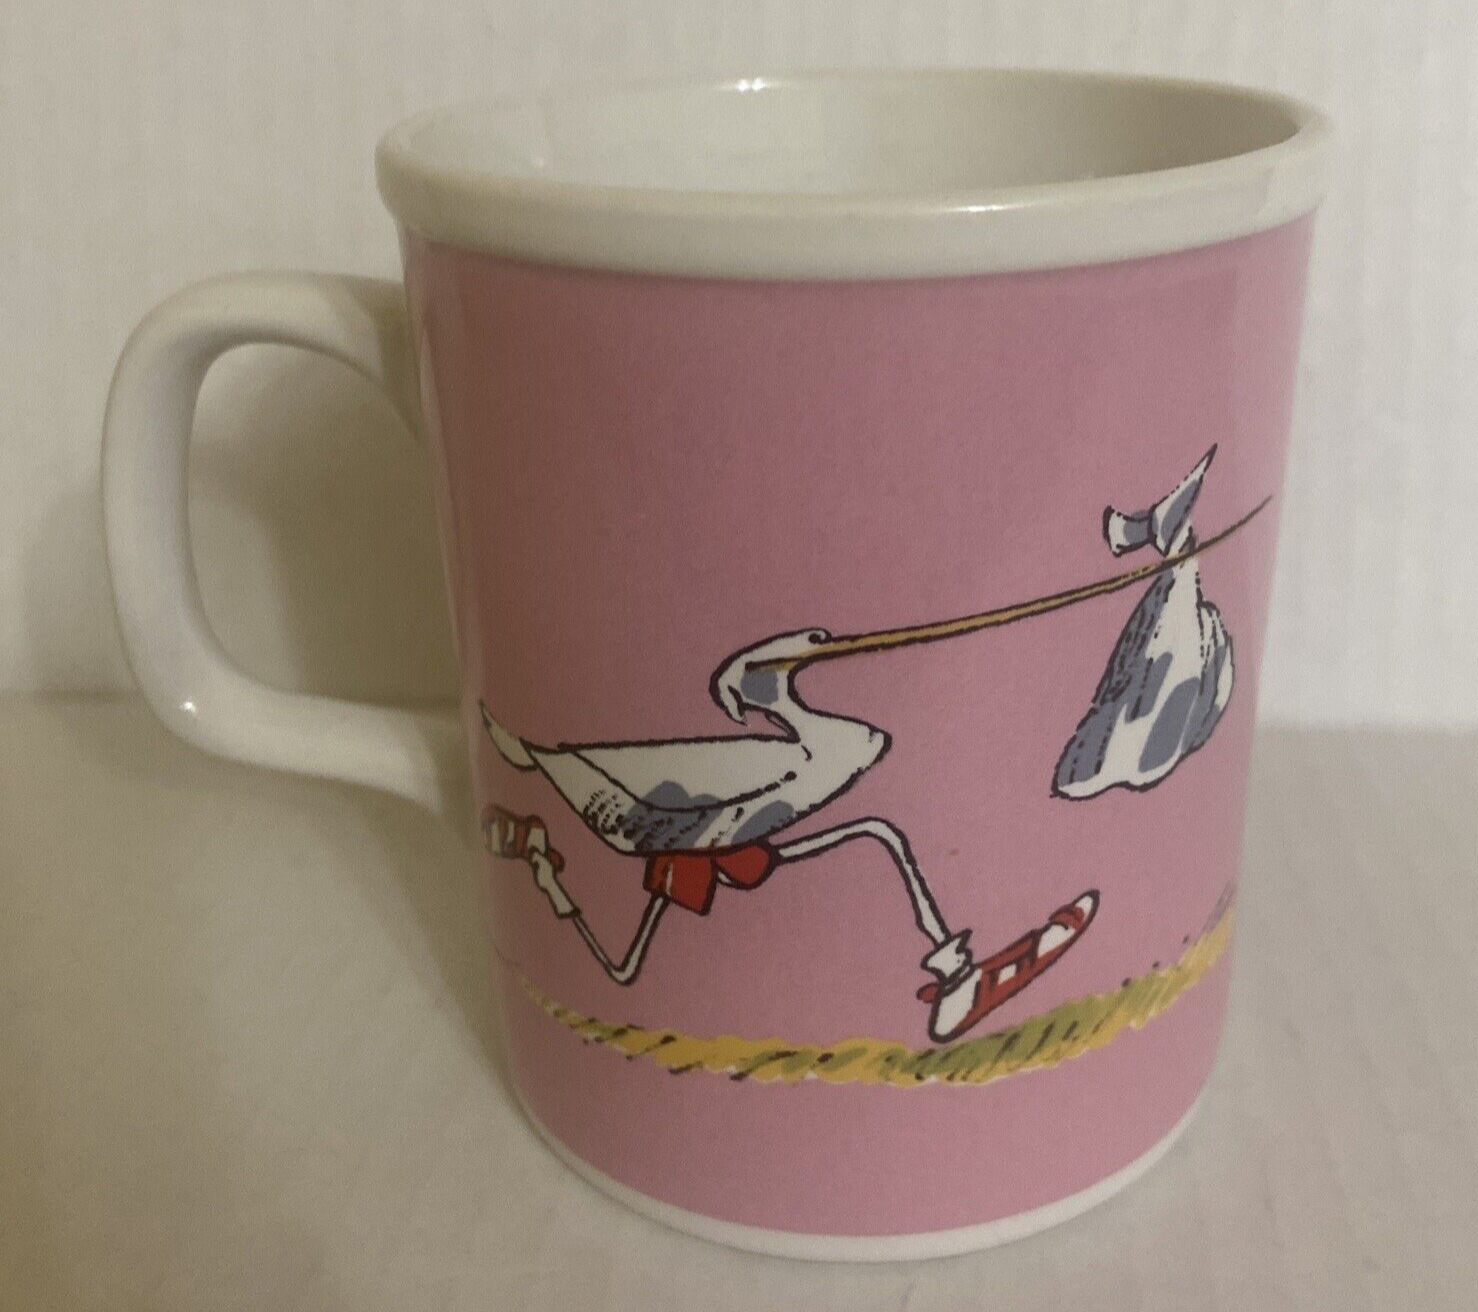 Vintage Enesco Imports Co. BEARD & MCKIE 1985 Pink Stork ba.by Coffee Cup